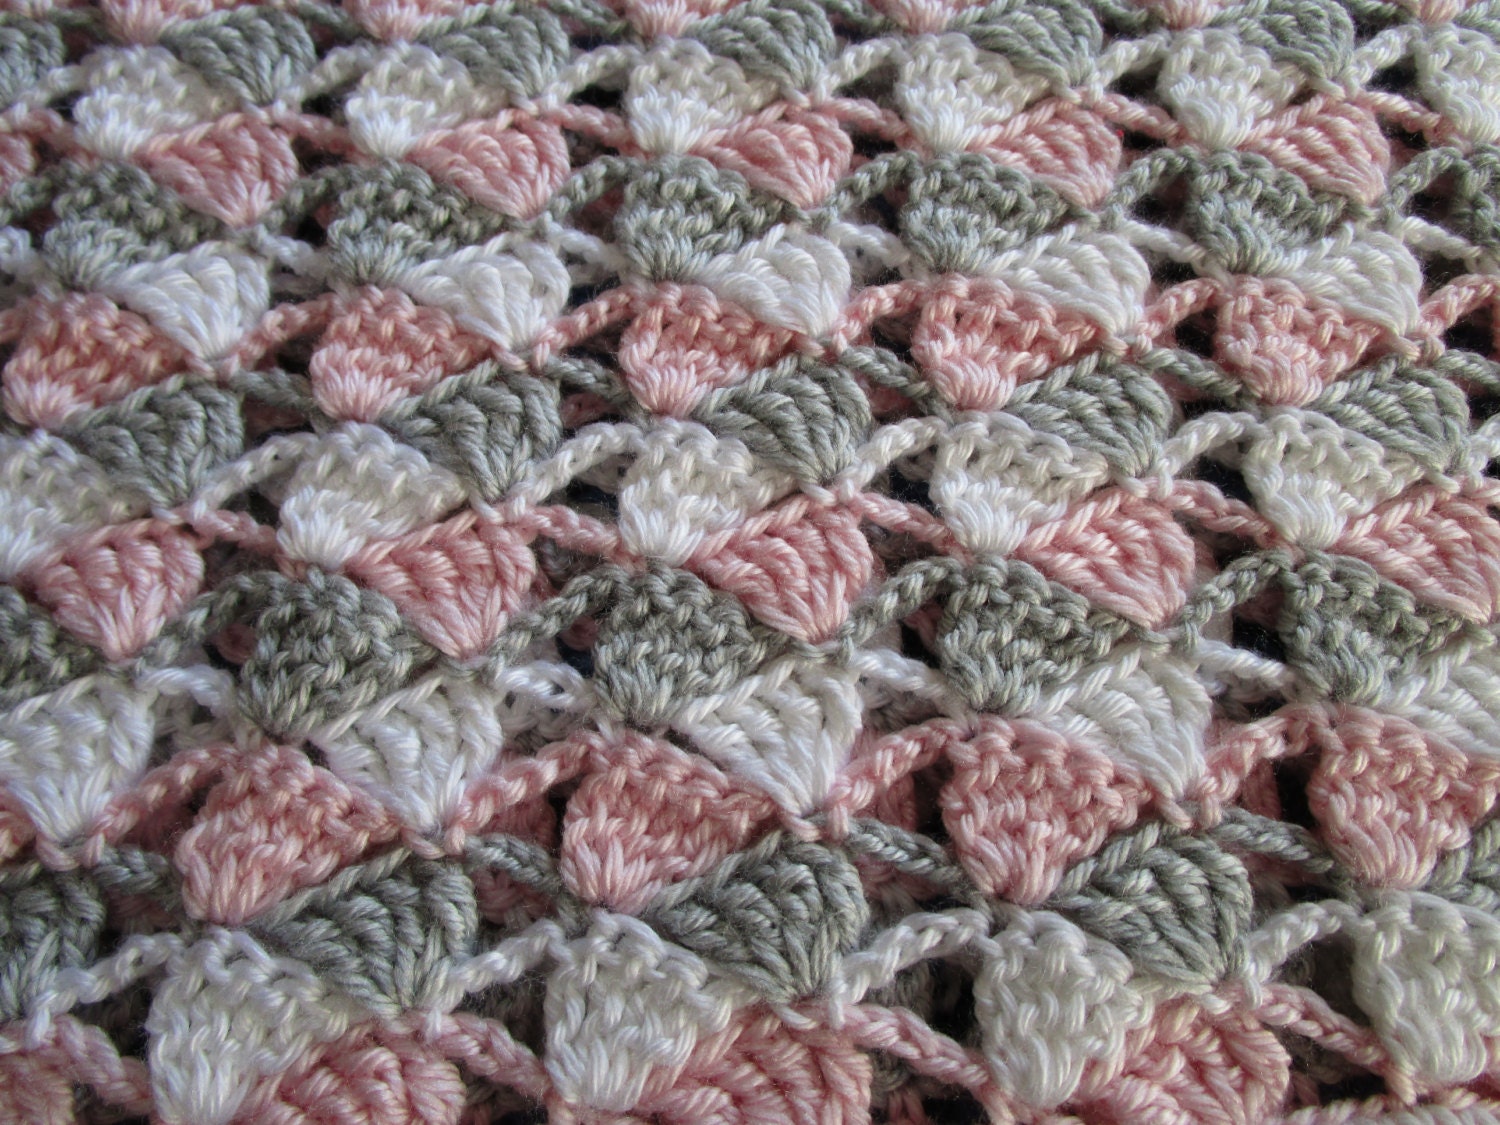 easy beginner afghan crochet patterns free